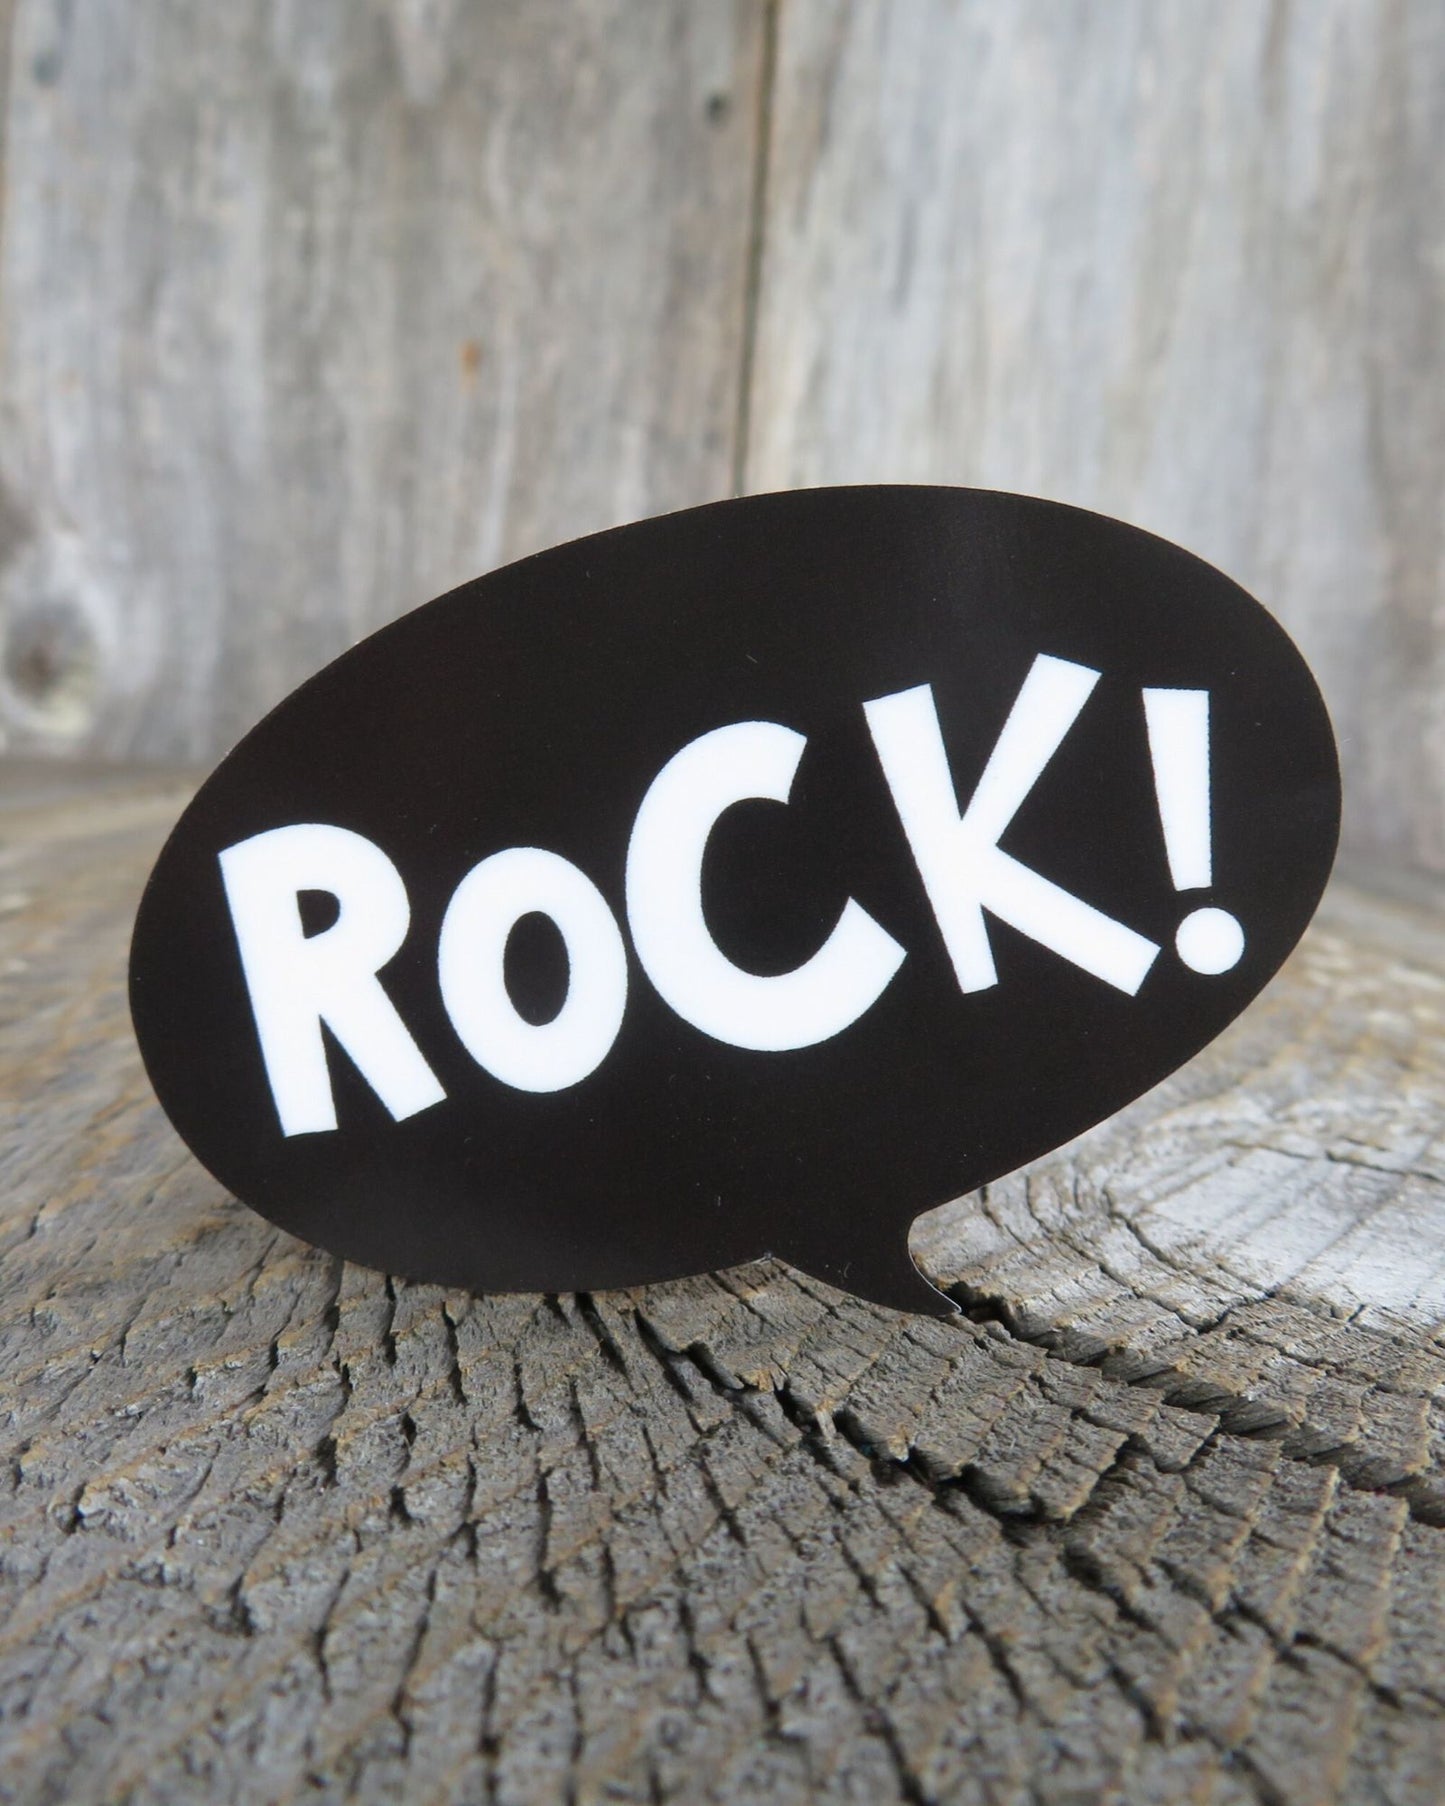 Rock! Sticker Waterproof Rock Lover Black and White Waterproof Geologist Science Humor Funny